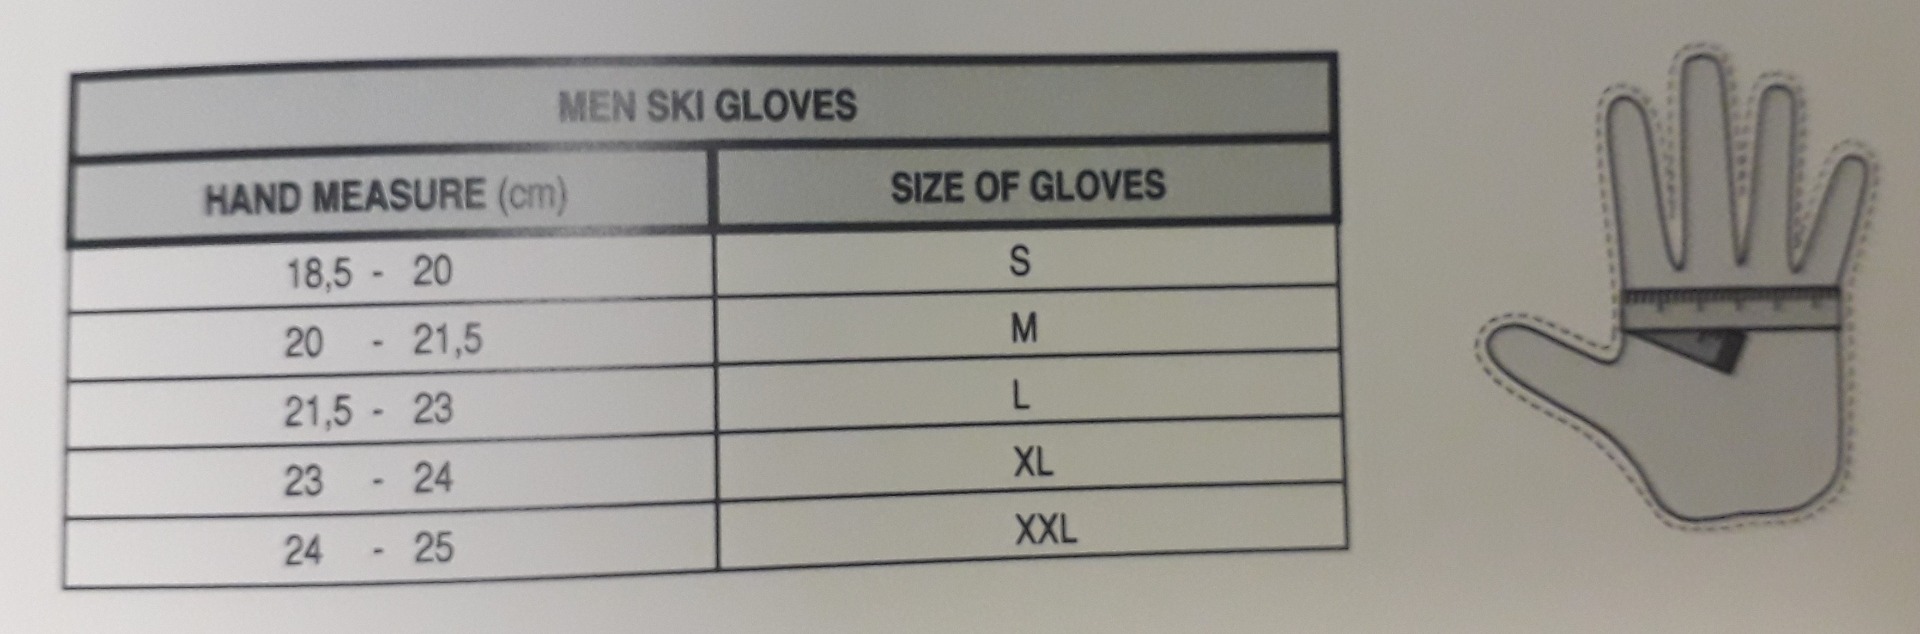 Relax Men's Glove size